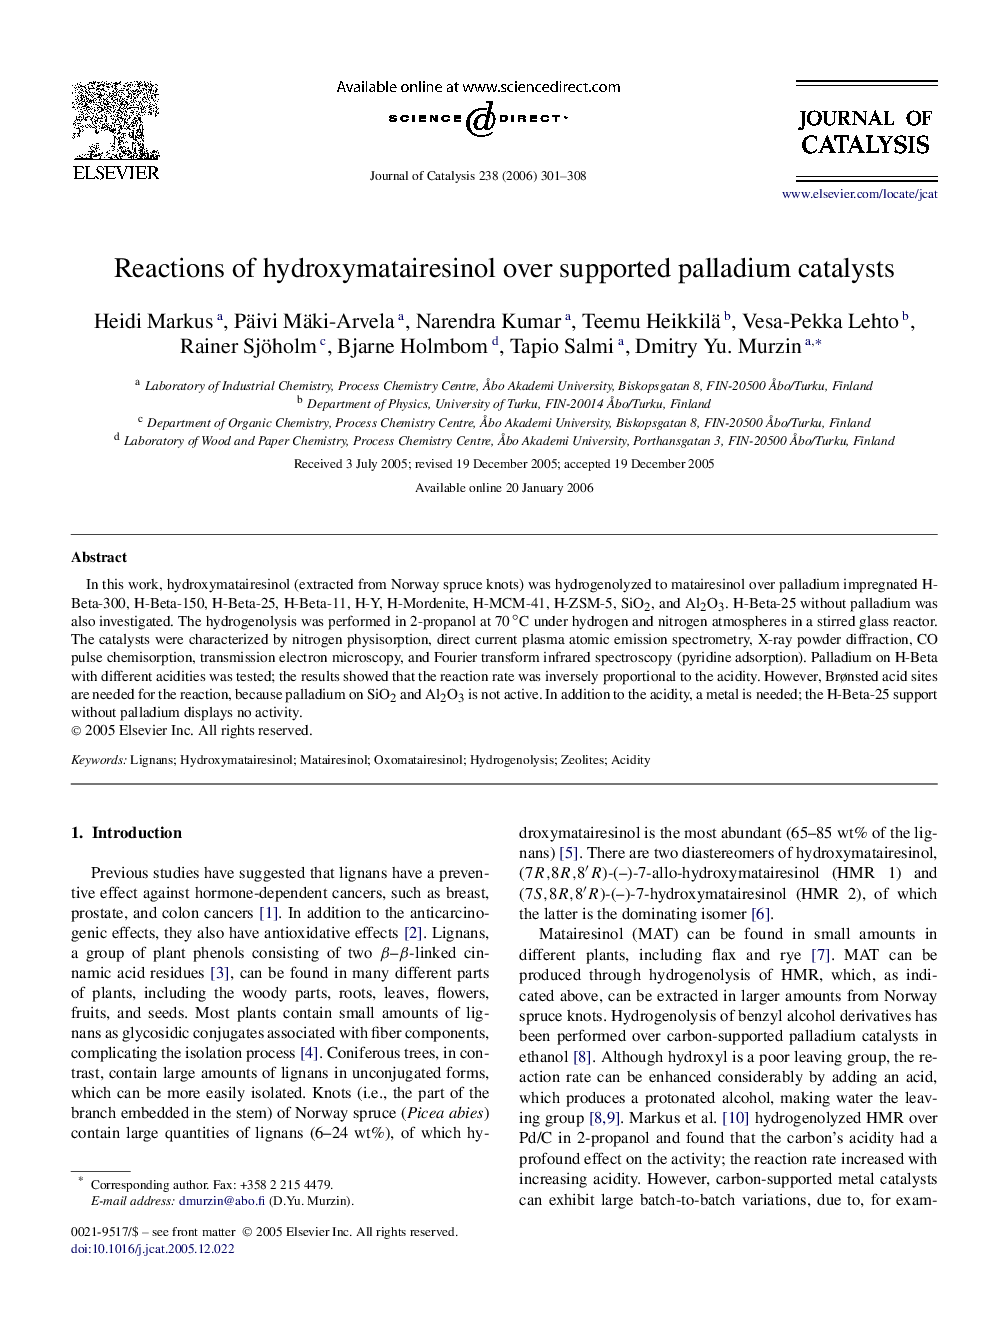 Reactions of hydroxymatairesinol over supported palladium catalysts